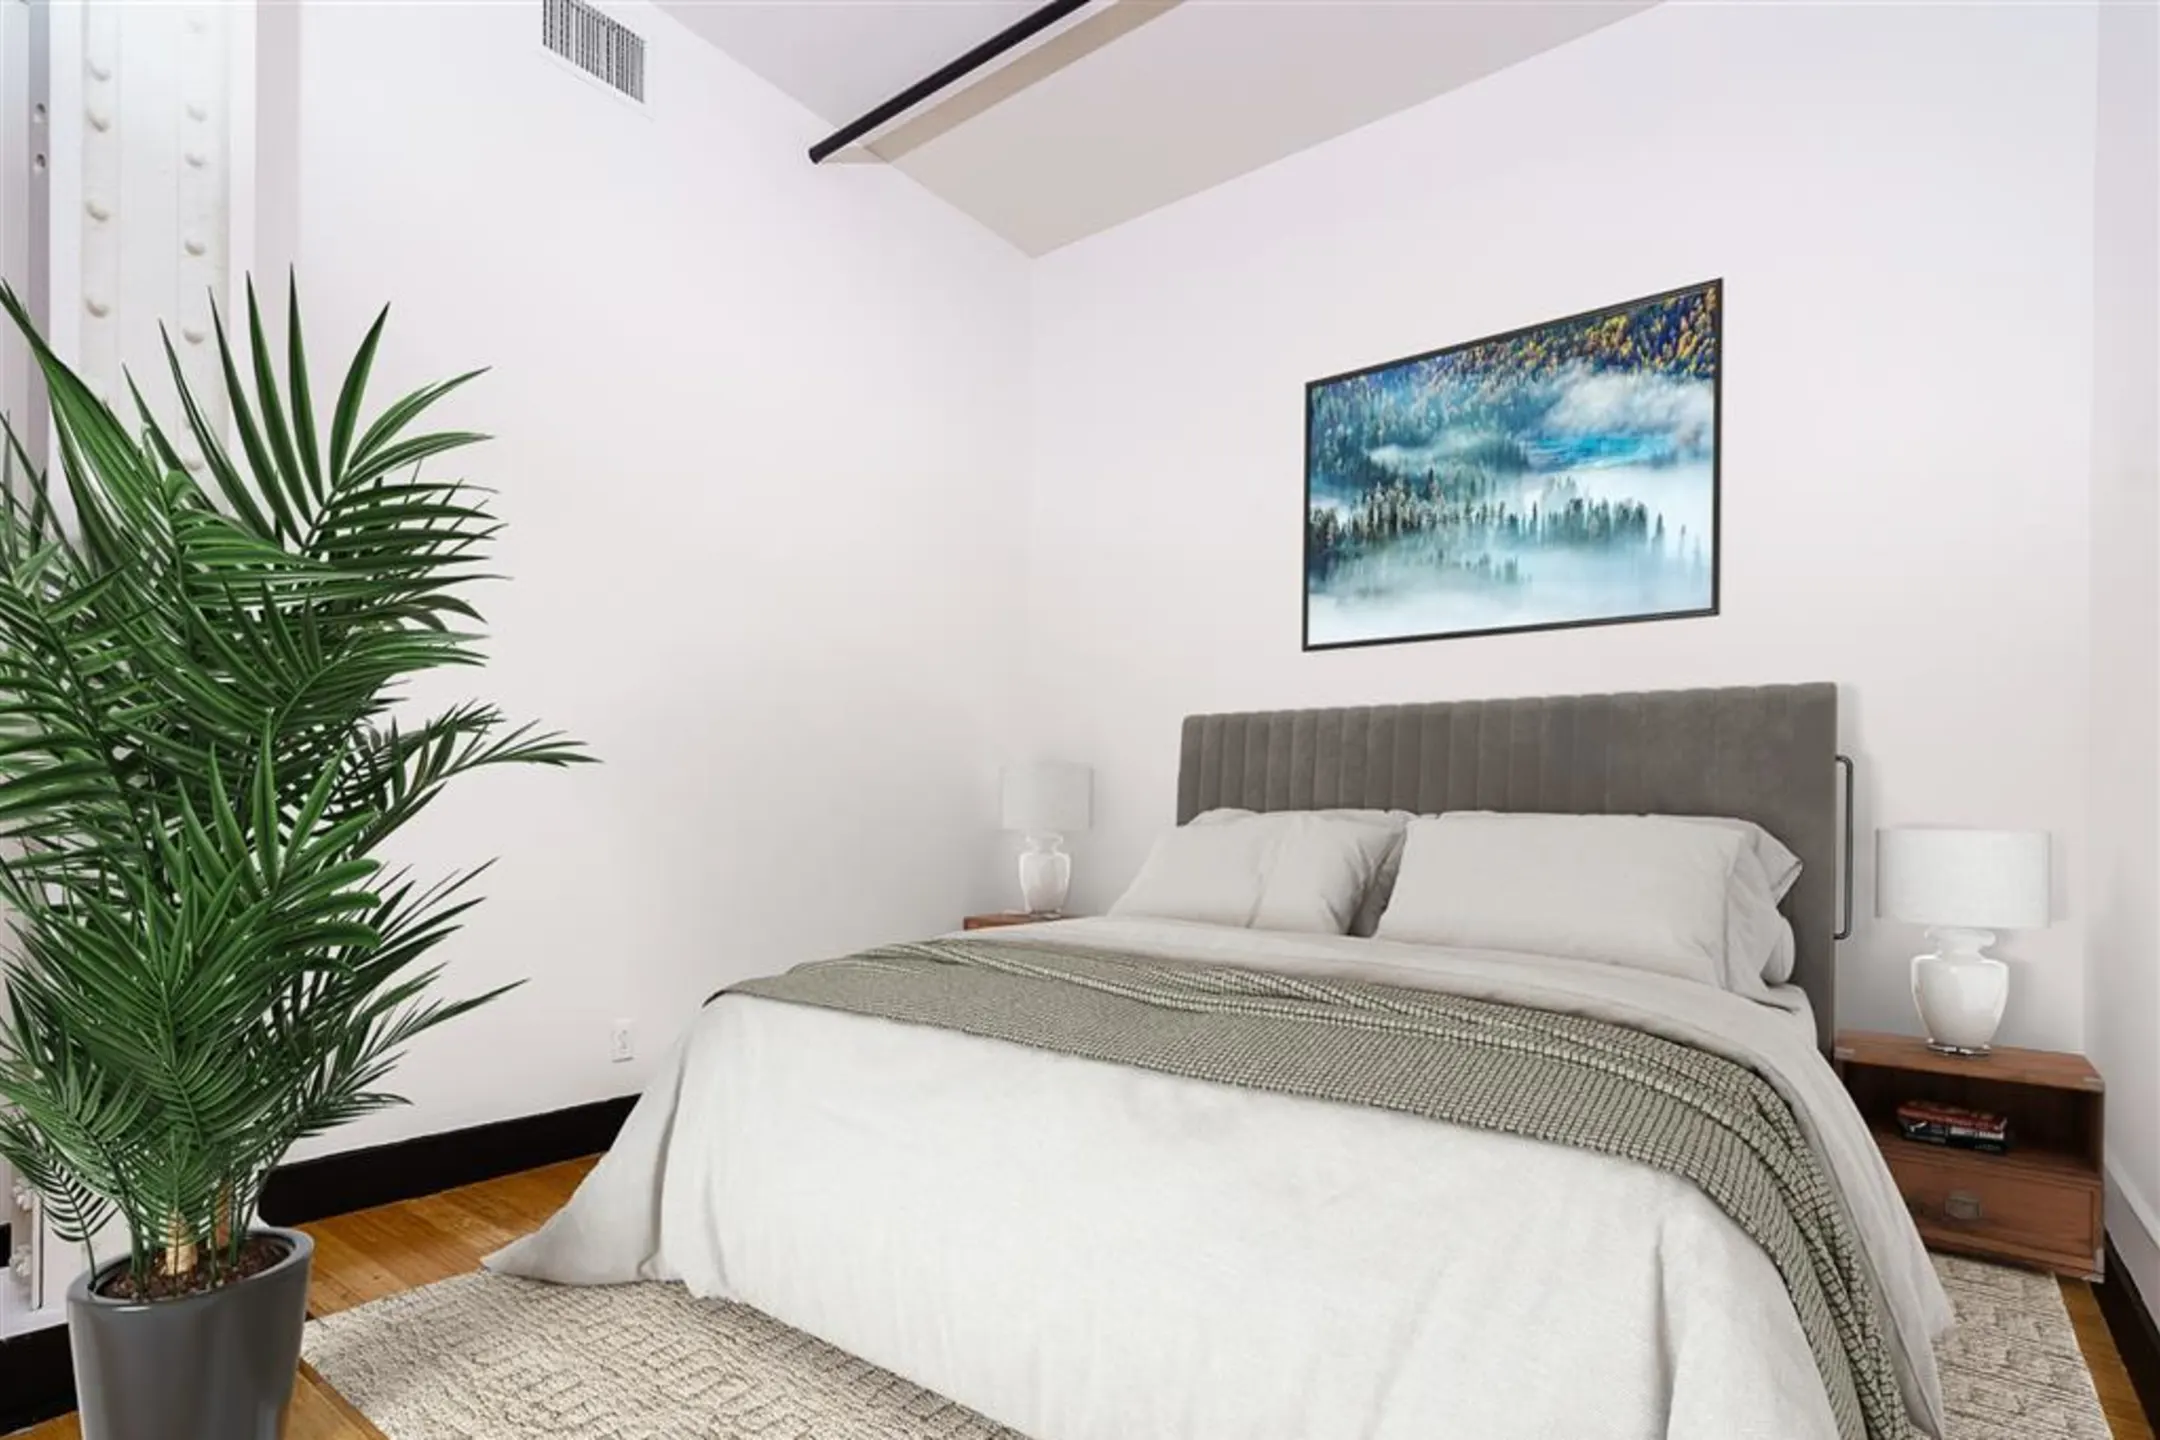 Bedroom - Mercantile Lofts - Los Angeles, CA